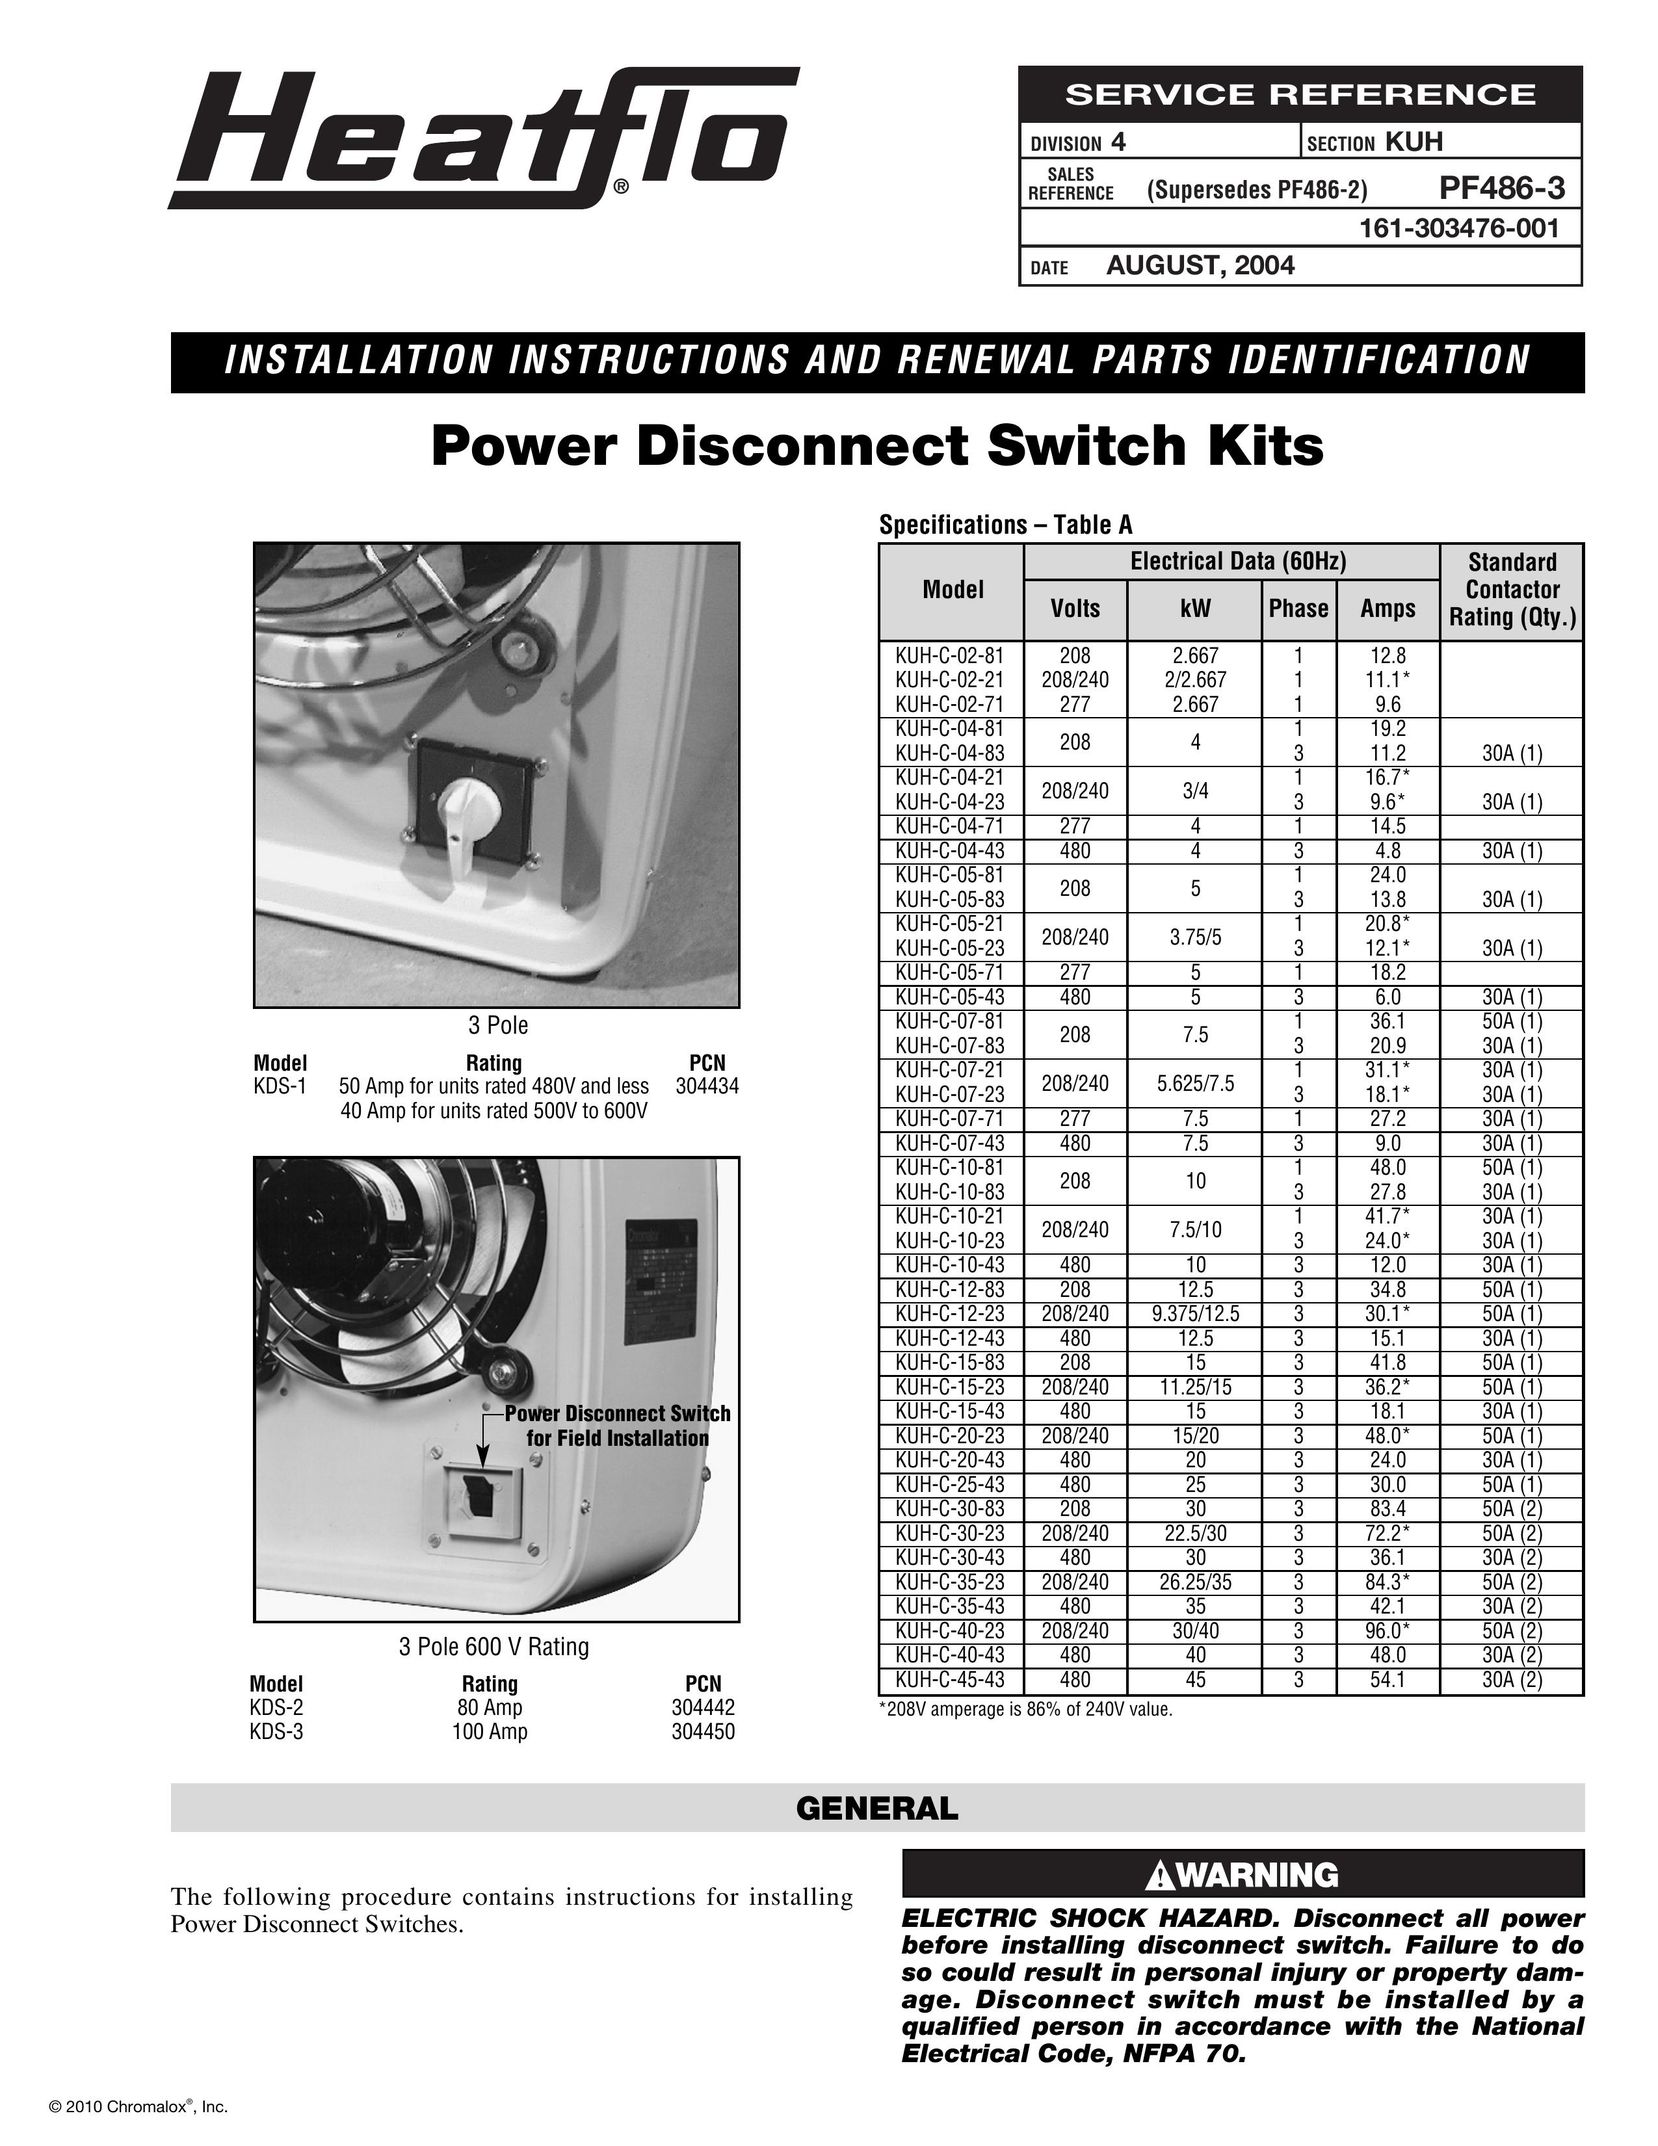 Chromalox KDS-1 Switch User Manual